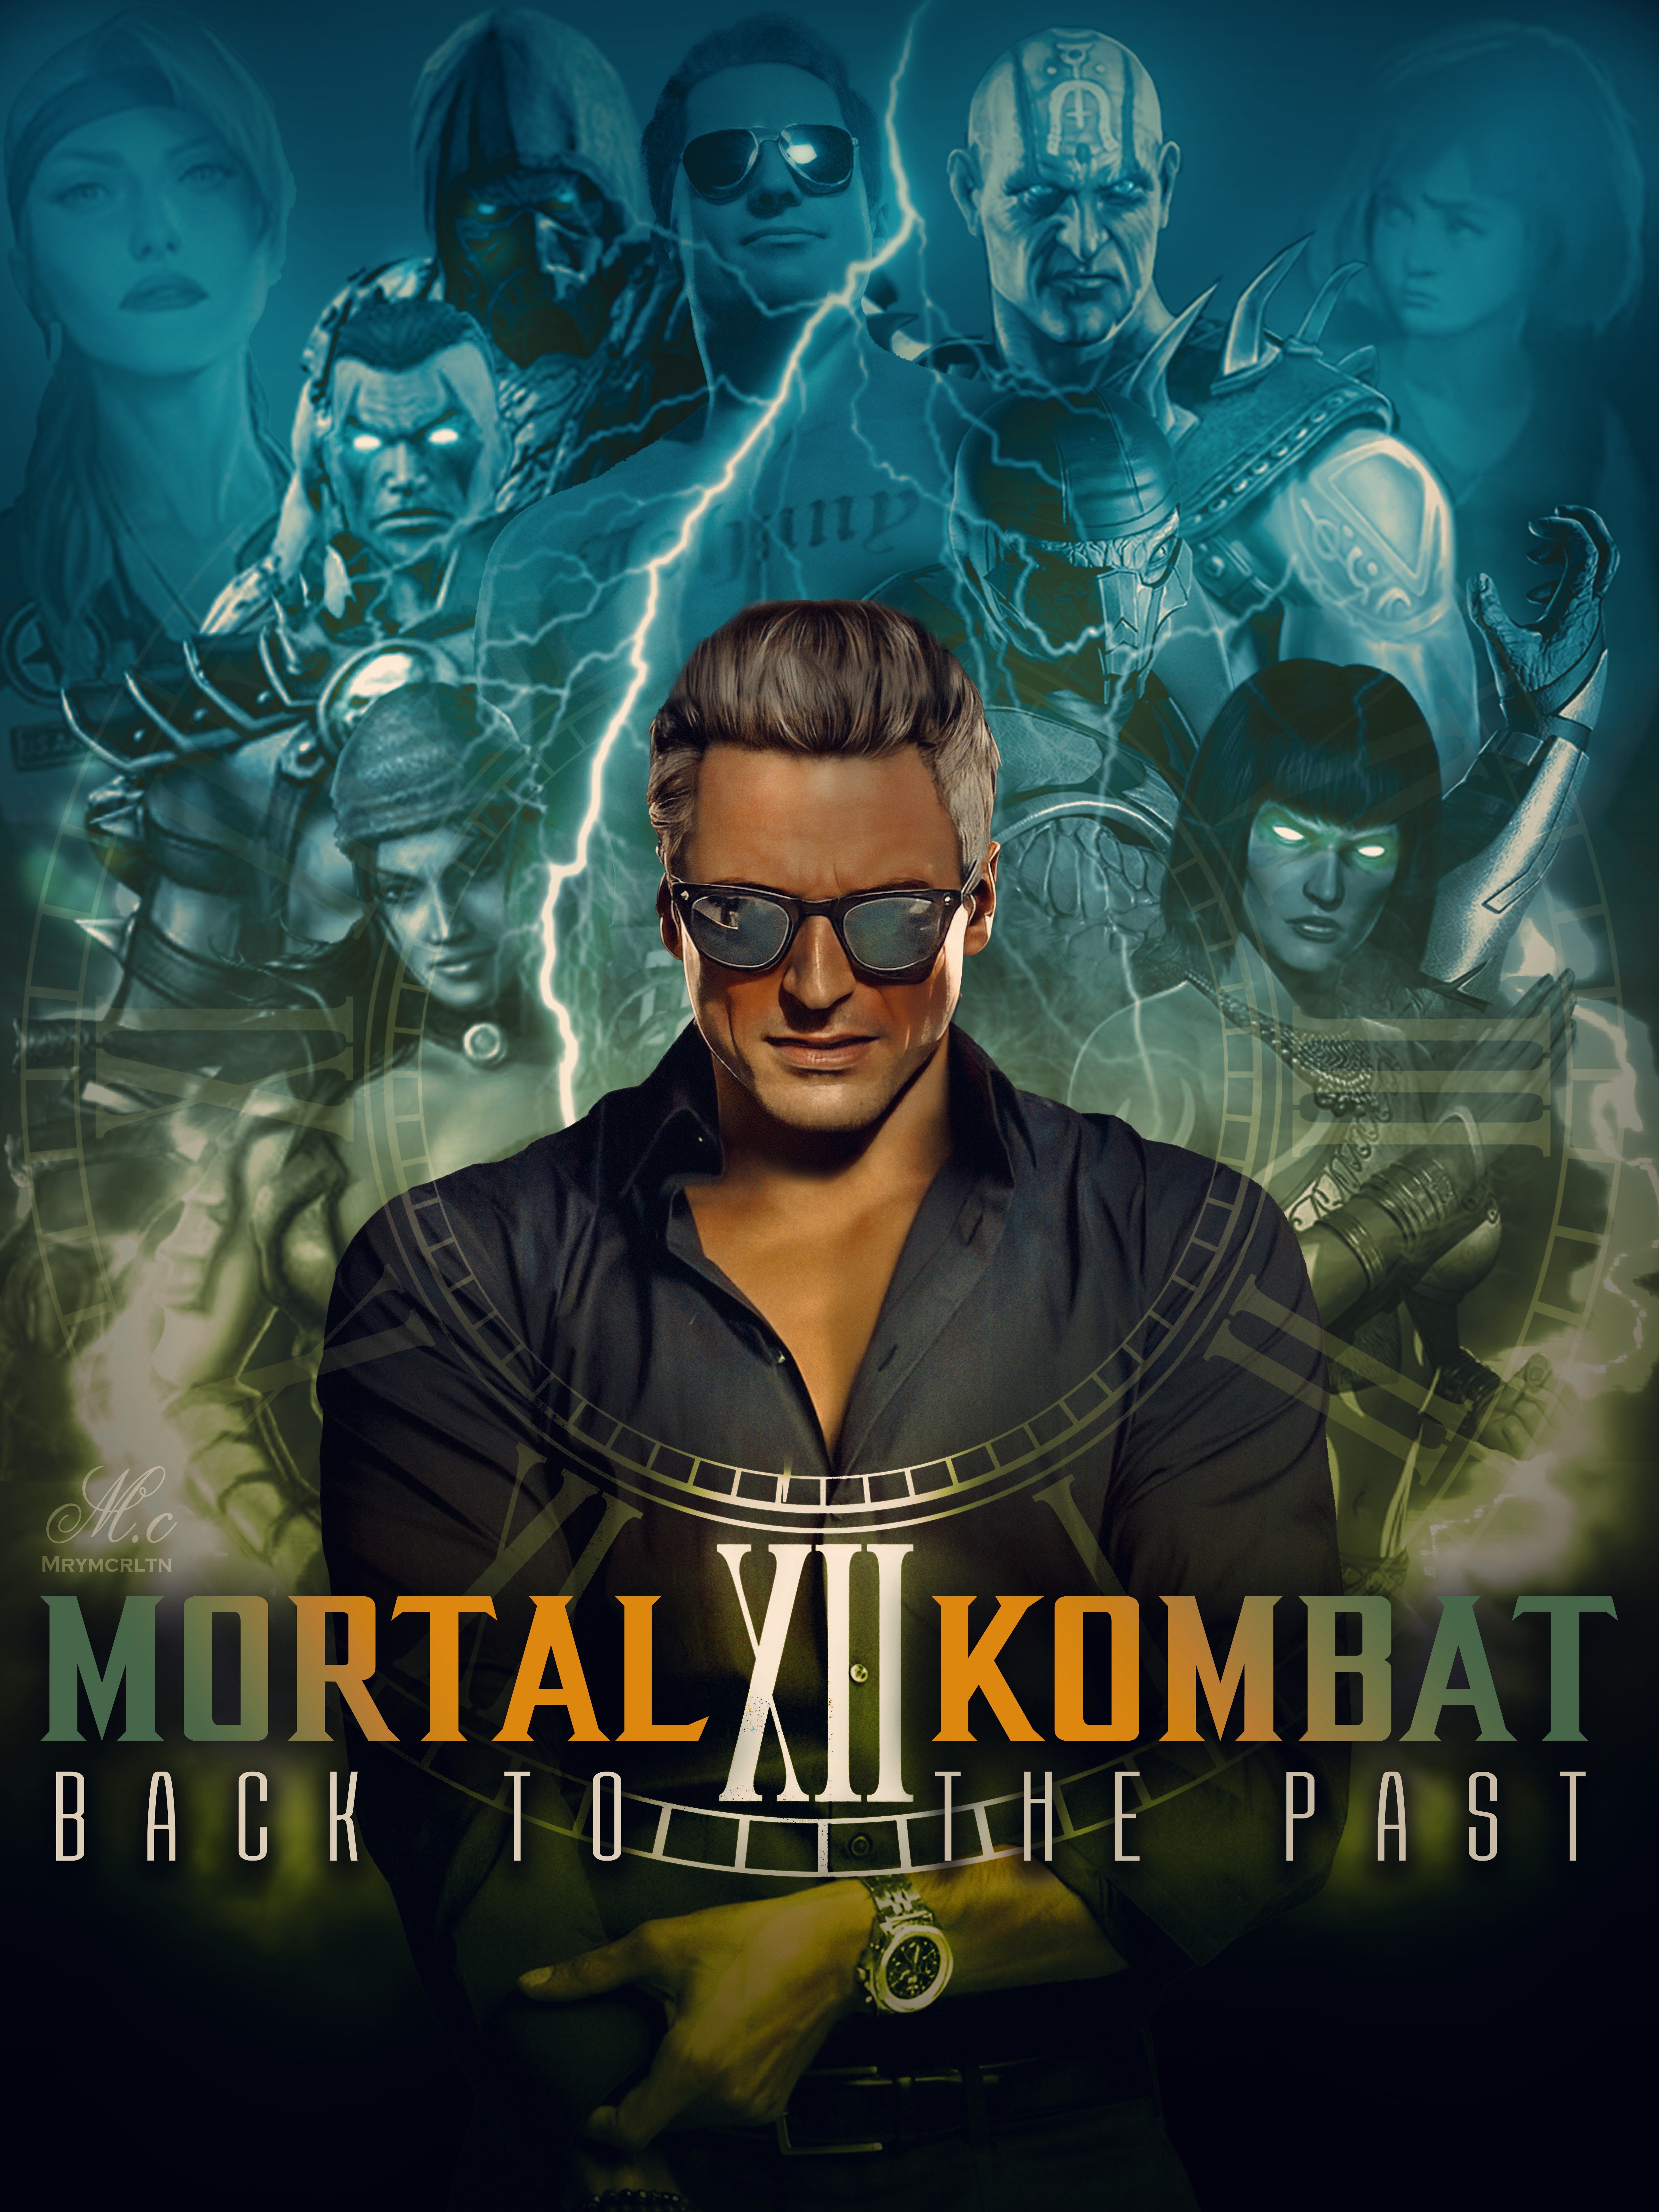 Mortal Kombat 12 - Back to the Past by Mrymcrltn on DeviantArt